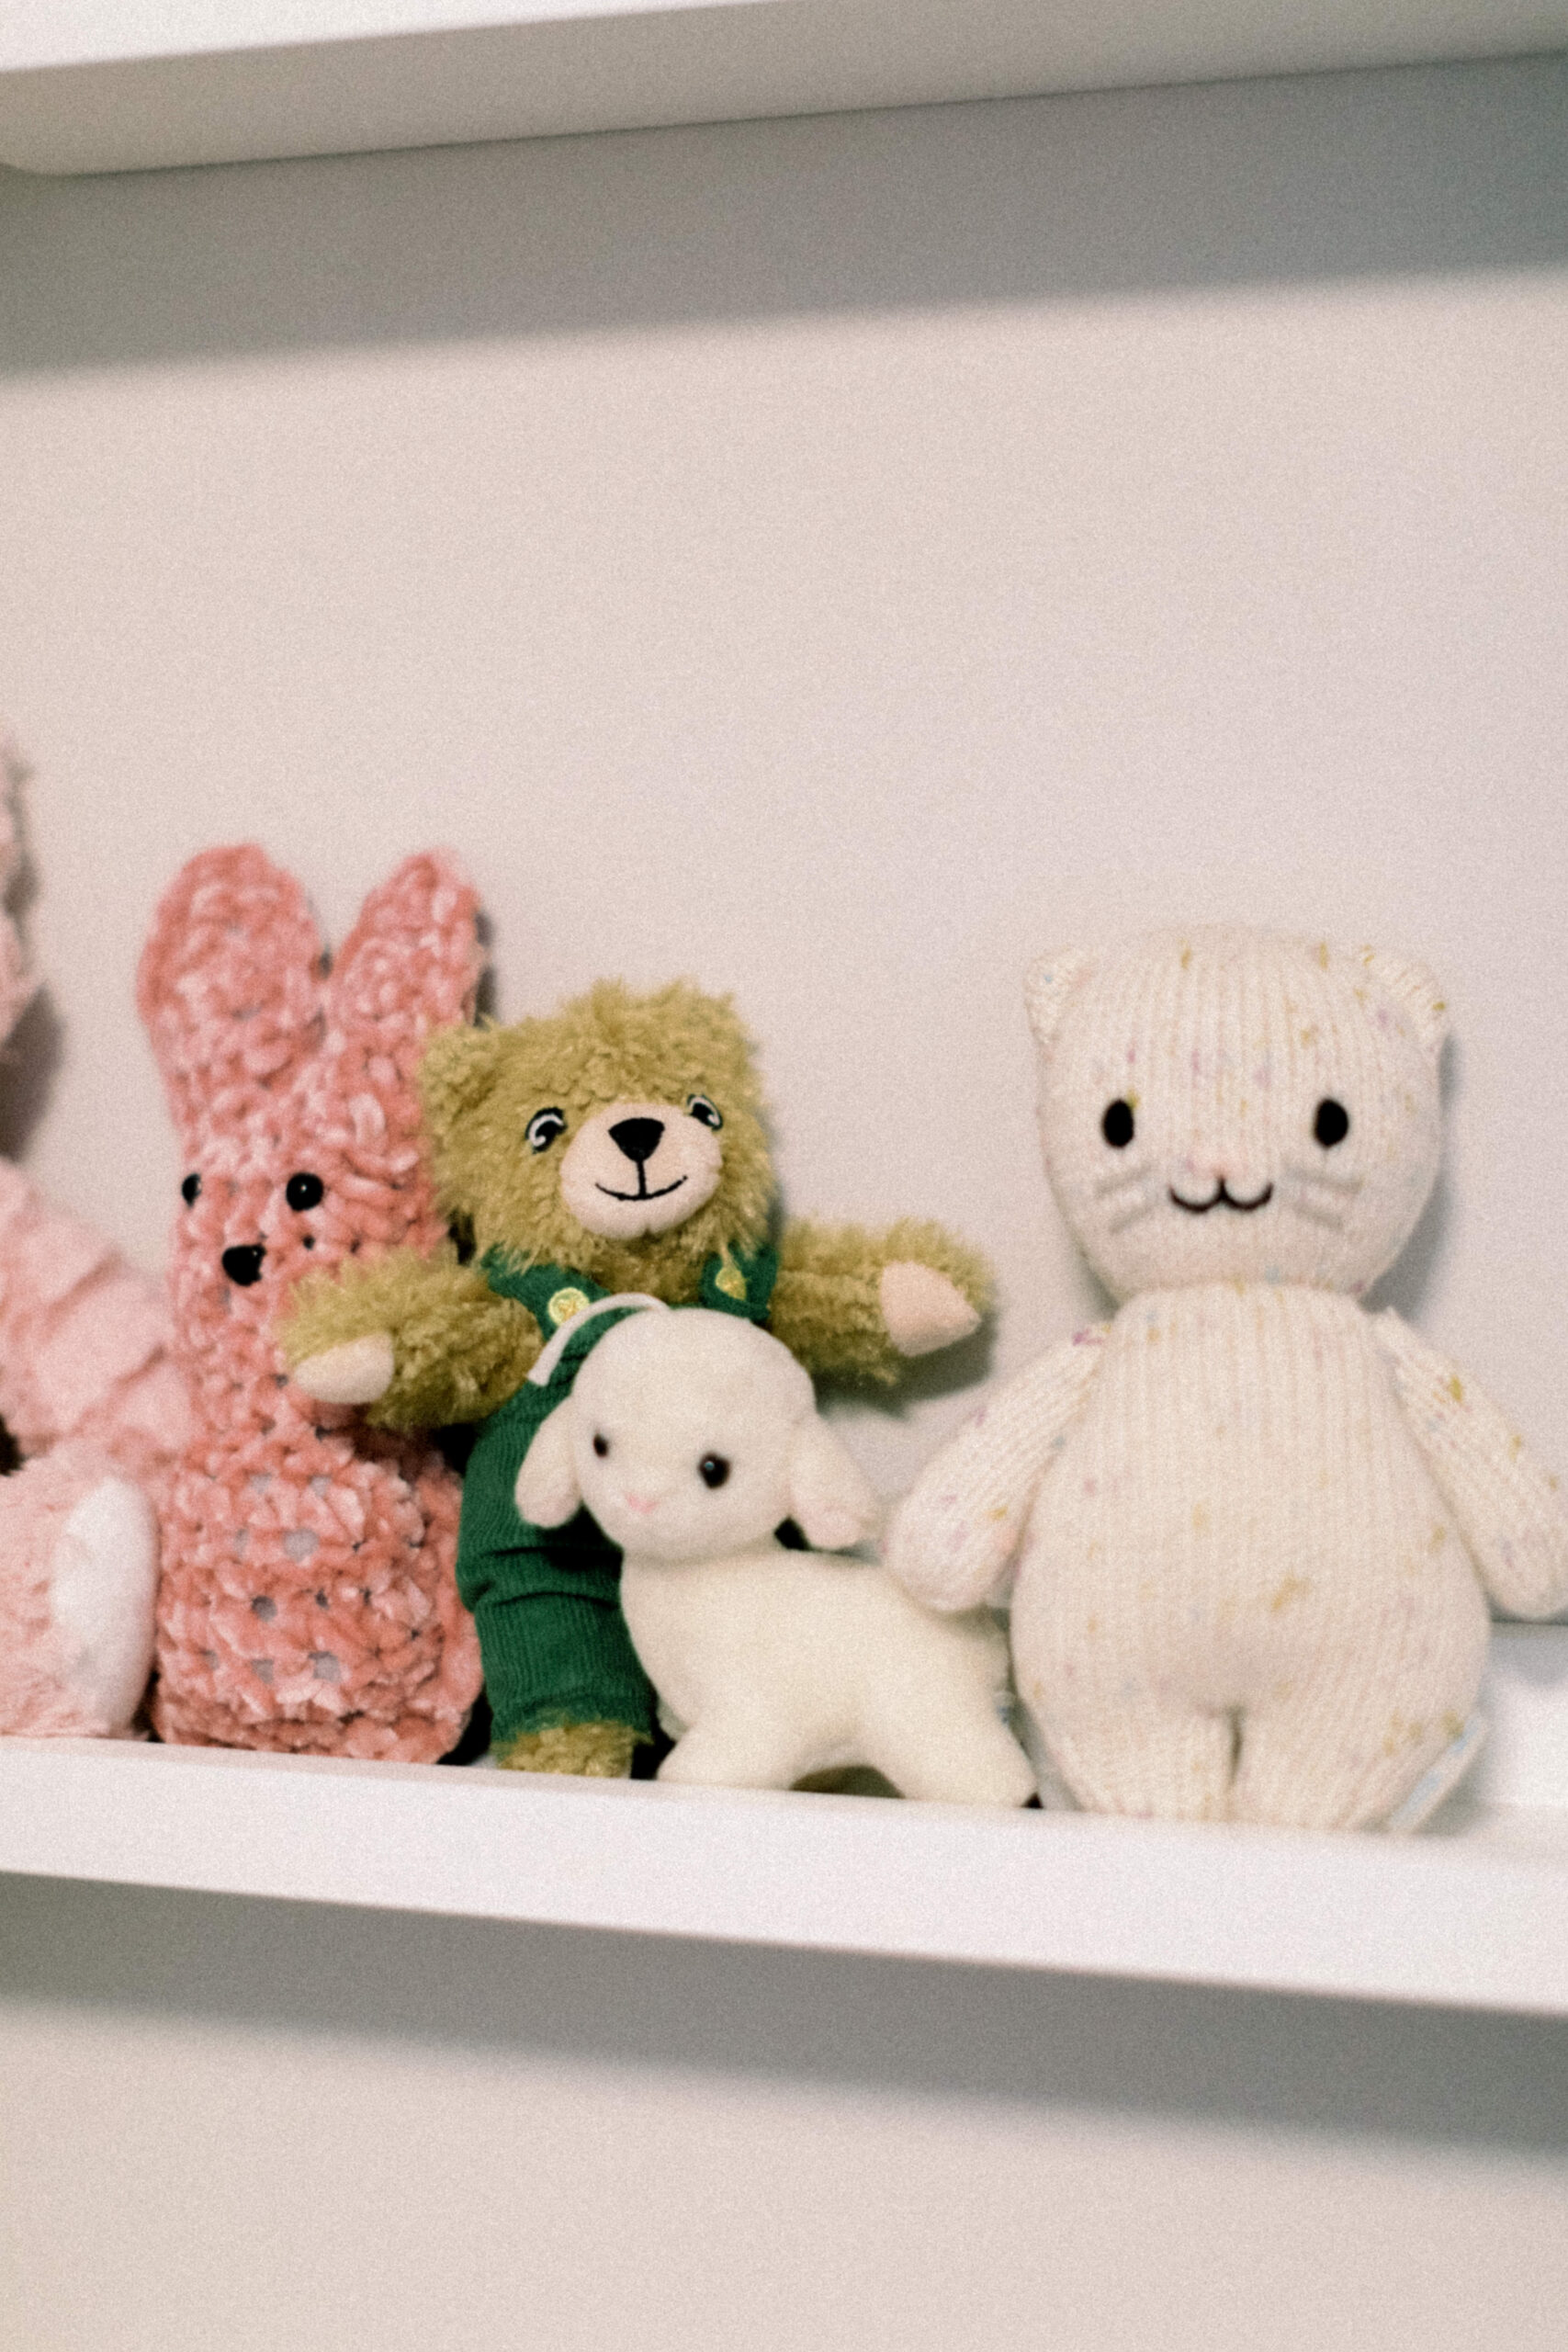 Maryland photographer captures stuffed animals on shelf in nursery